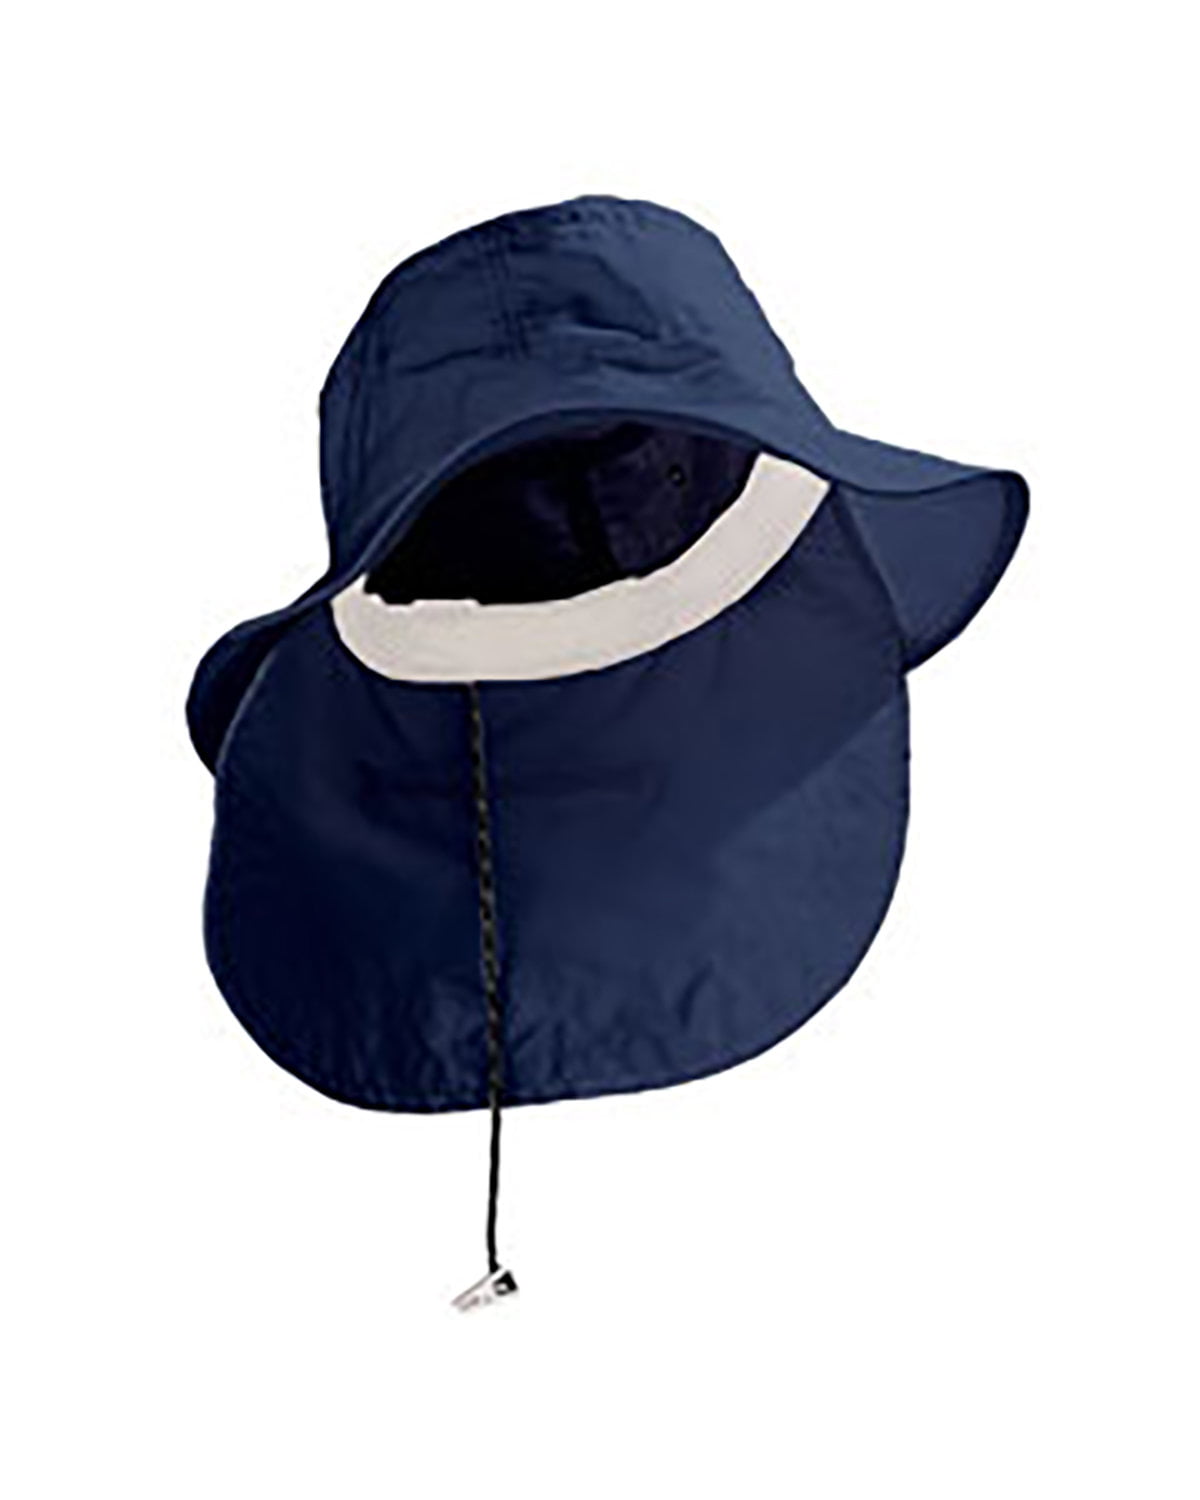 EOM101 Adams Headwear Extreme Outdoor Fishing Travel Sun Wide Baseball Hat Cap 